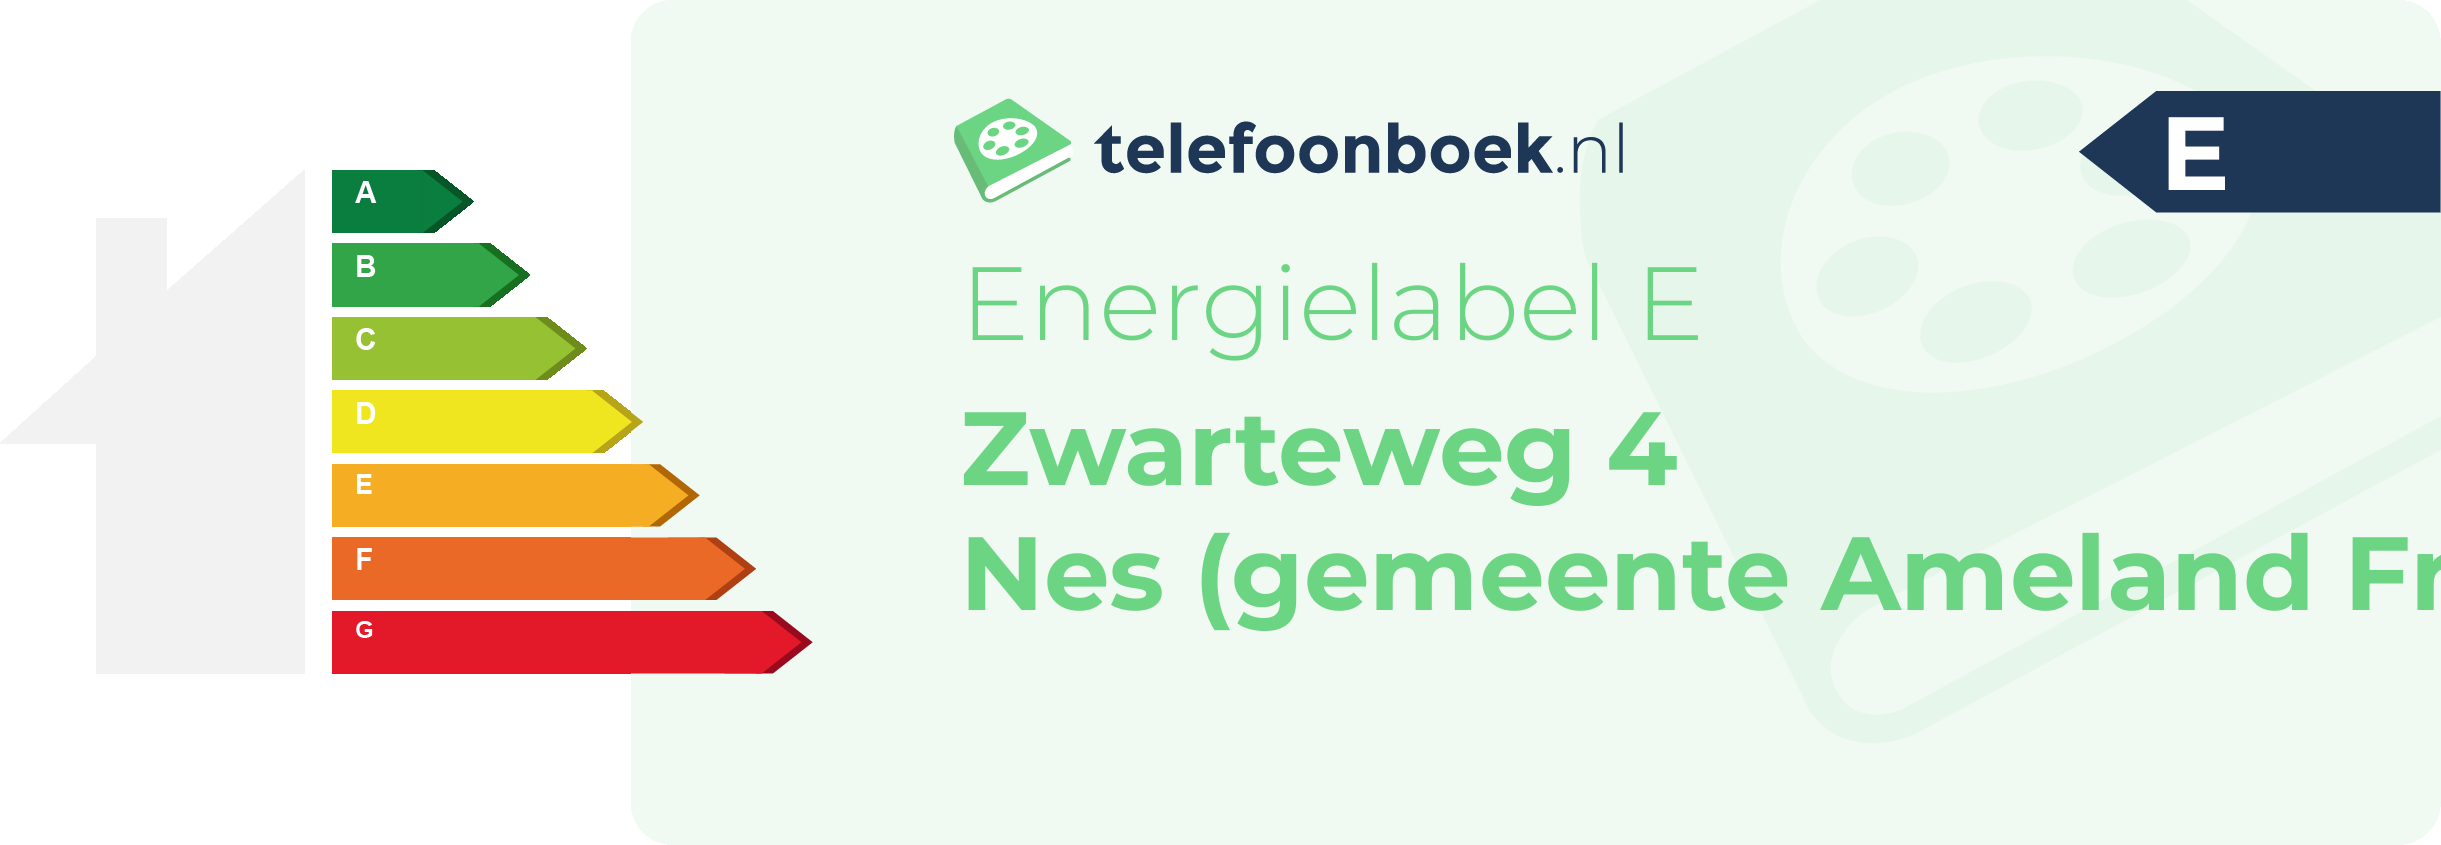 Energielabel Zwarteweg 4 Nes (gemeente Ameland Friesland)